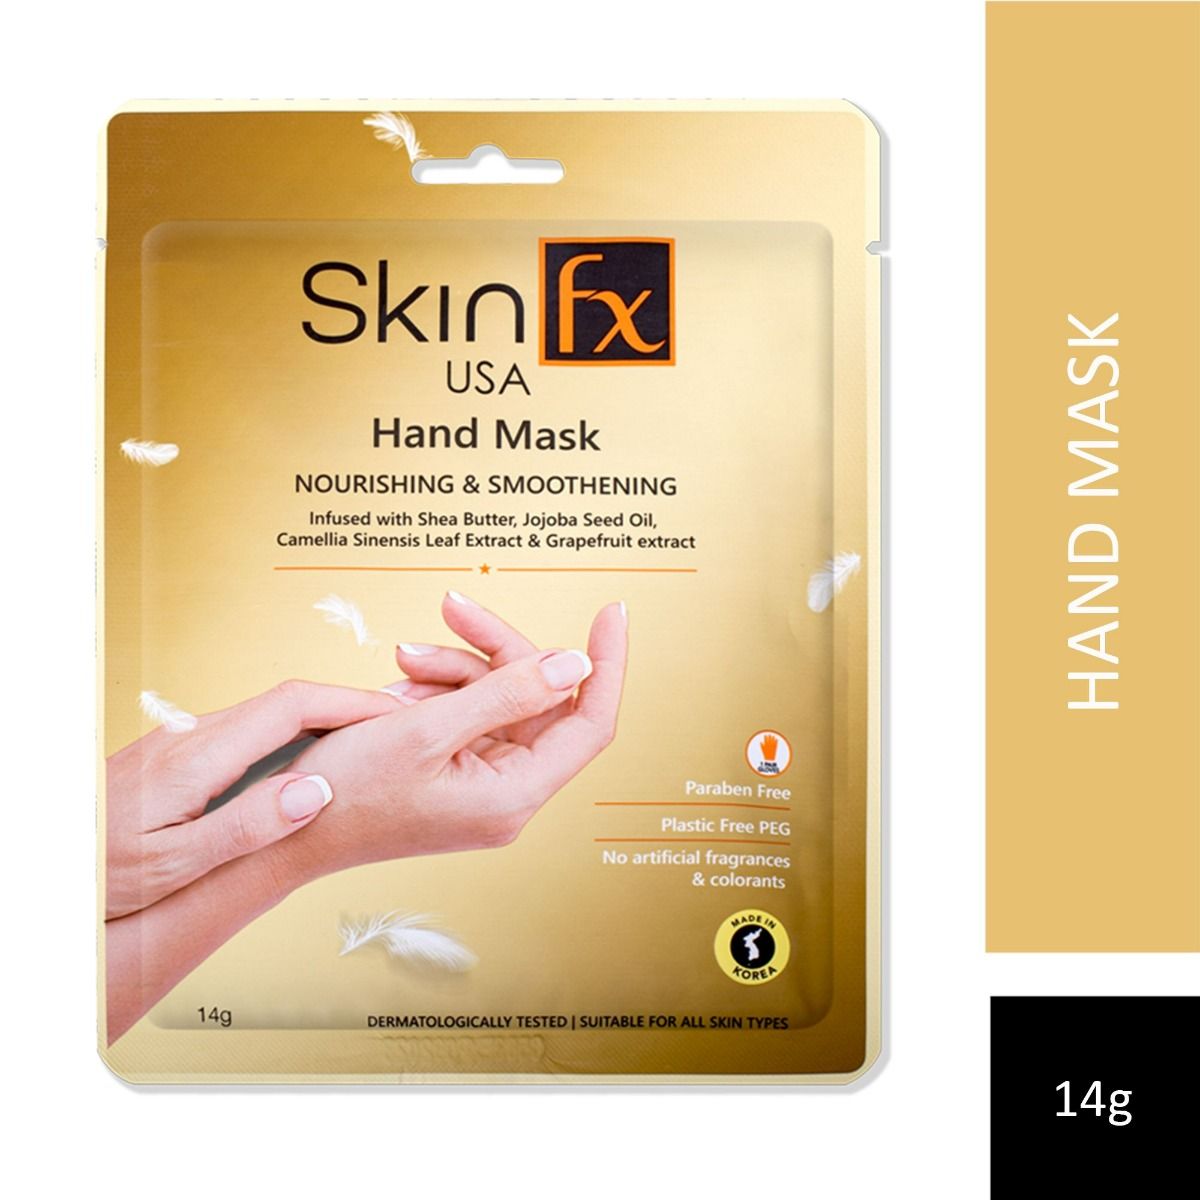 Skin Fx Nourishing & Smoothening Hand Mask, 14 gm, Pack of 1 